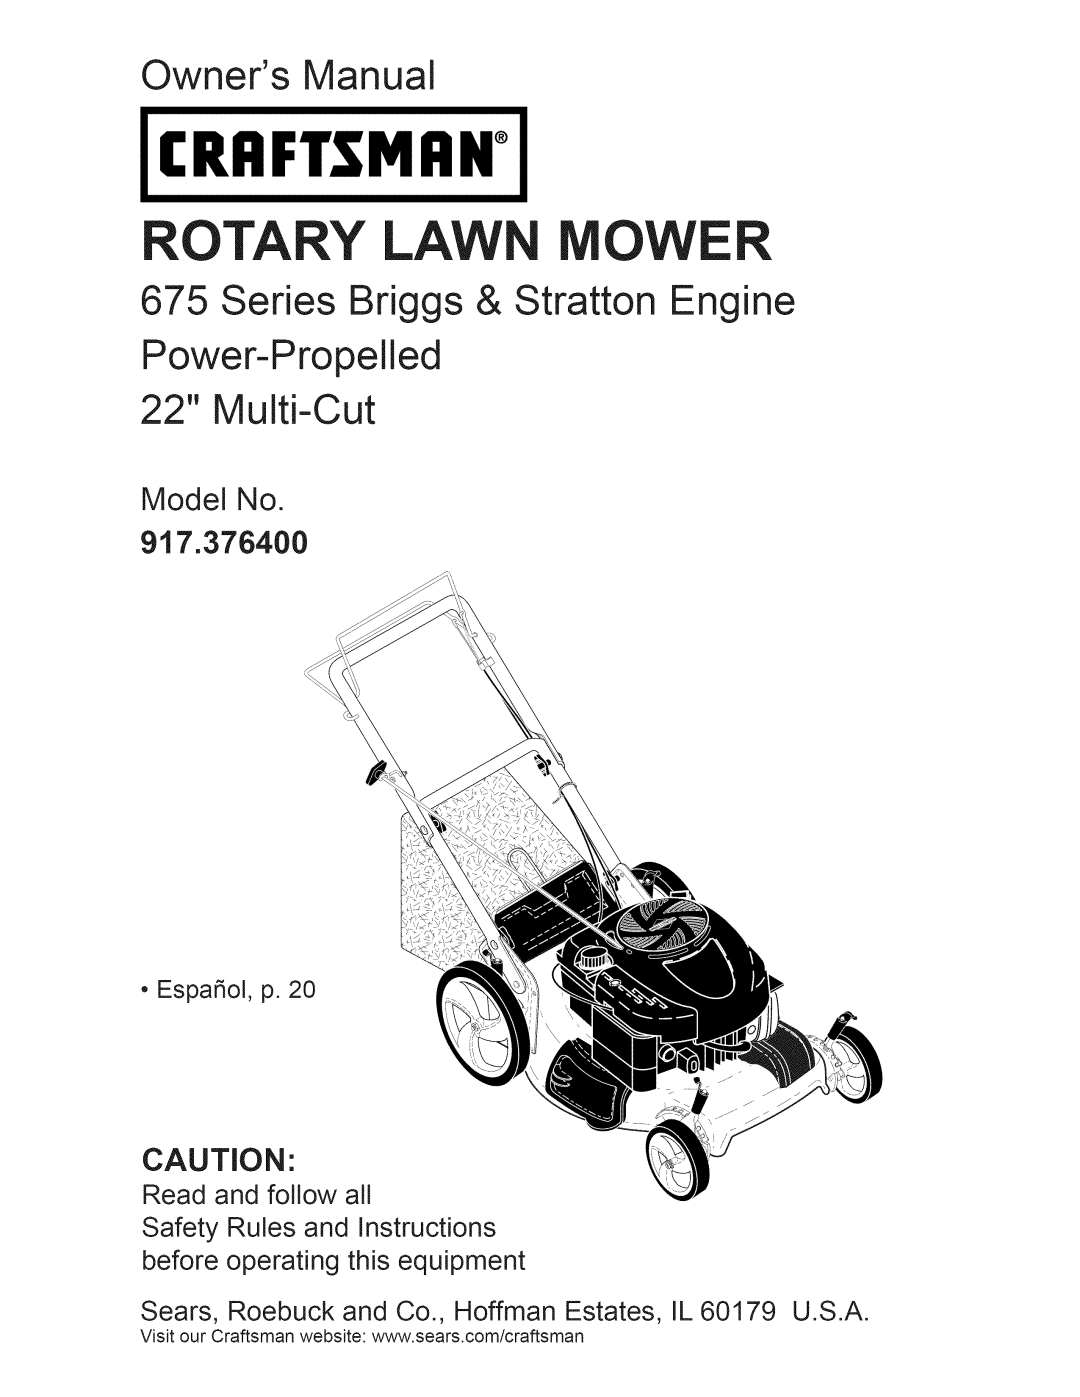 Craftsman owner manual Model No 917.376400, Craftsman, Rotary Lawn Mower, Series Briggs & Stratton Engine 